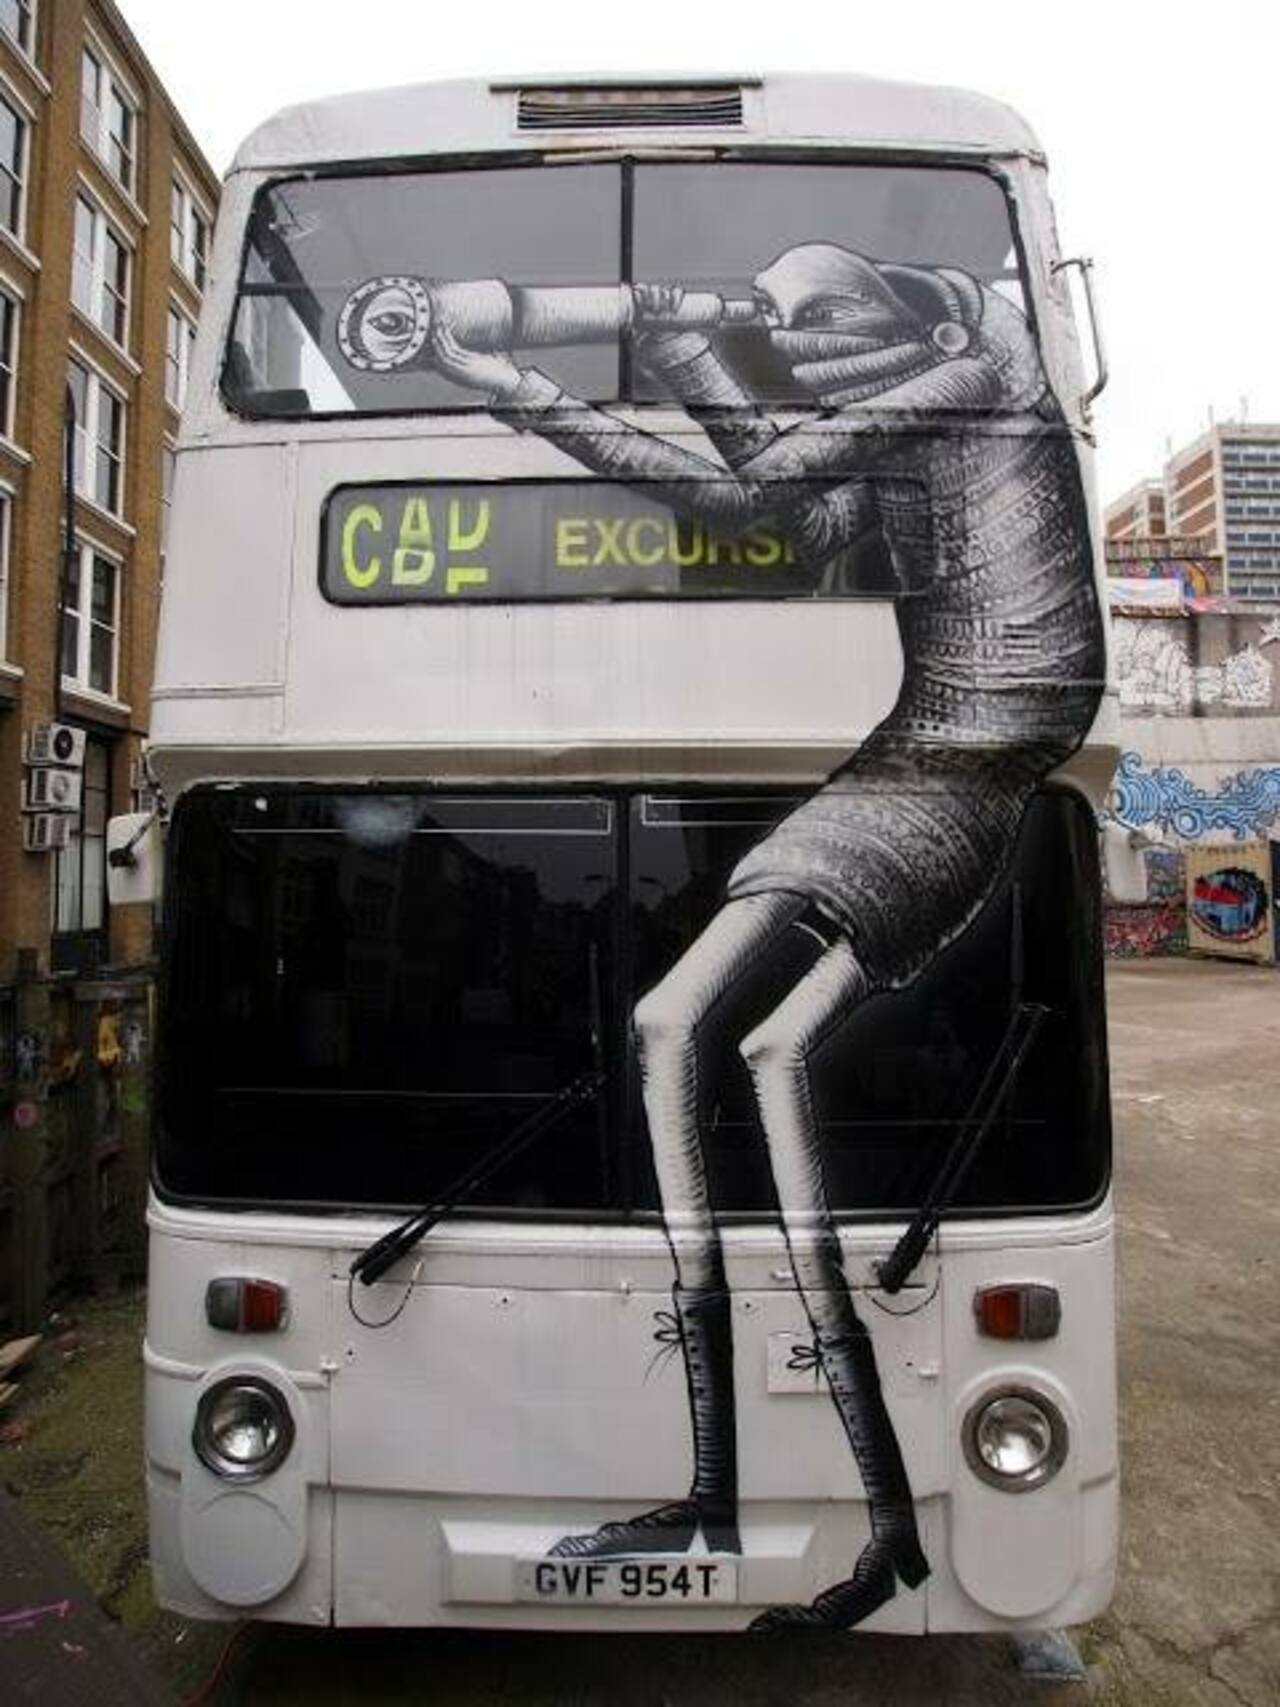 #Phlegm on a bus ! via @upbyartists #streetart #illustrator #art #gallery #graffiti http://t.co/JoLd0SKzgK"